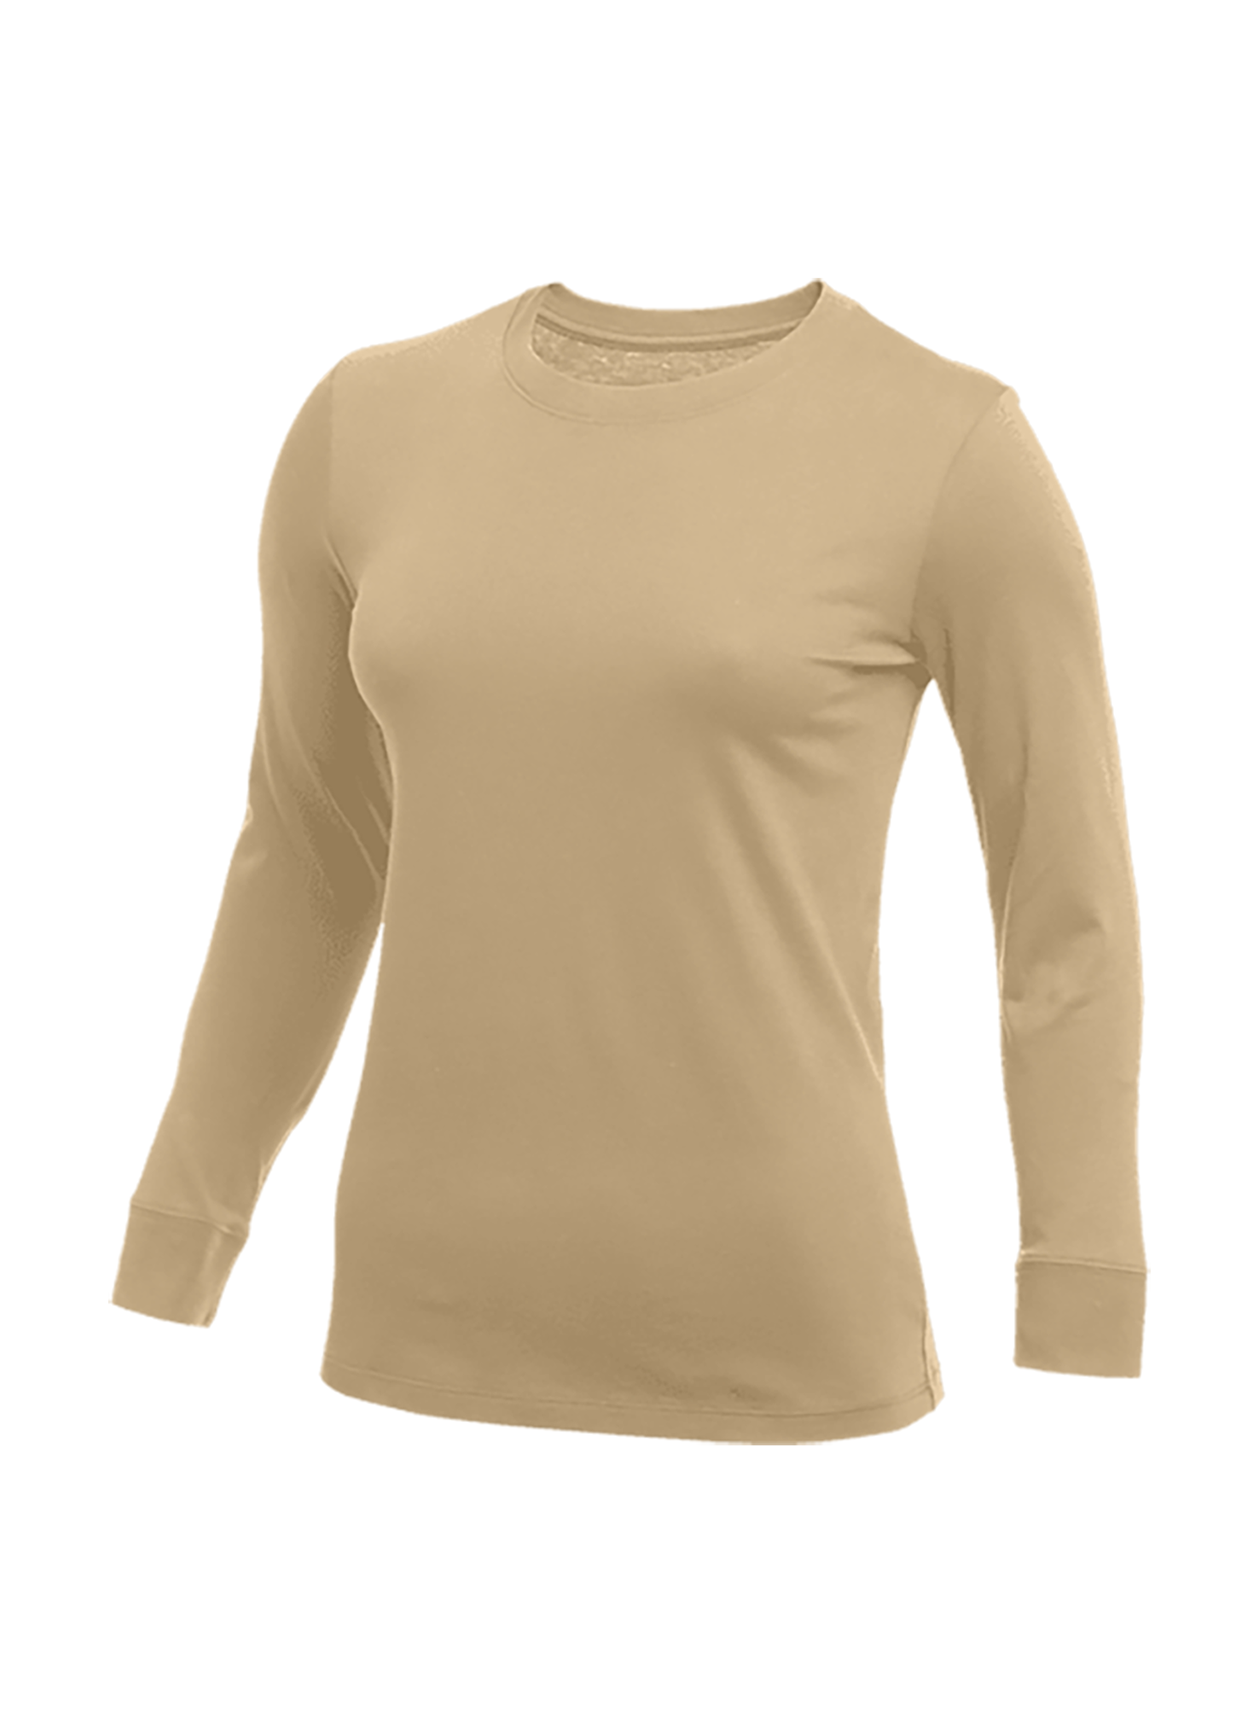 Nike Women's Team Gold Long-Sleeve T-Shirt